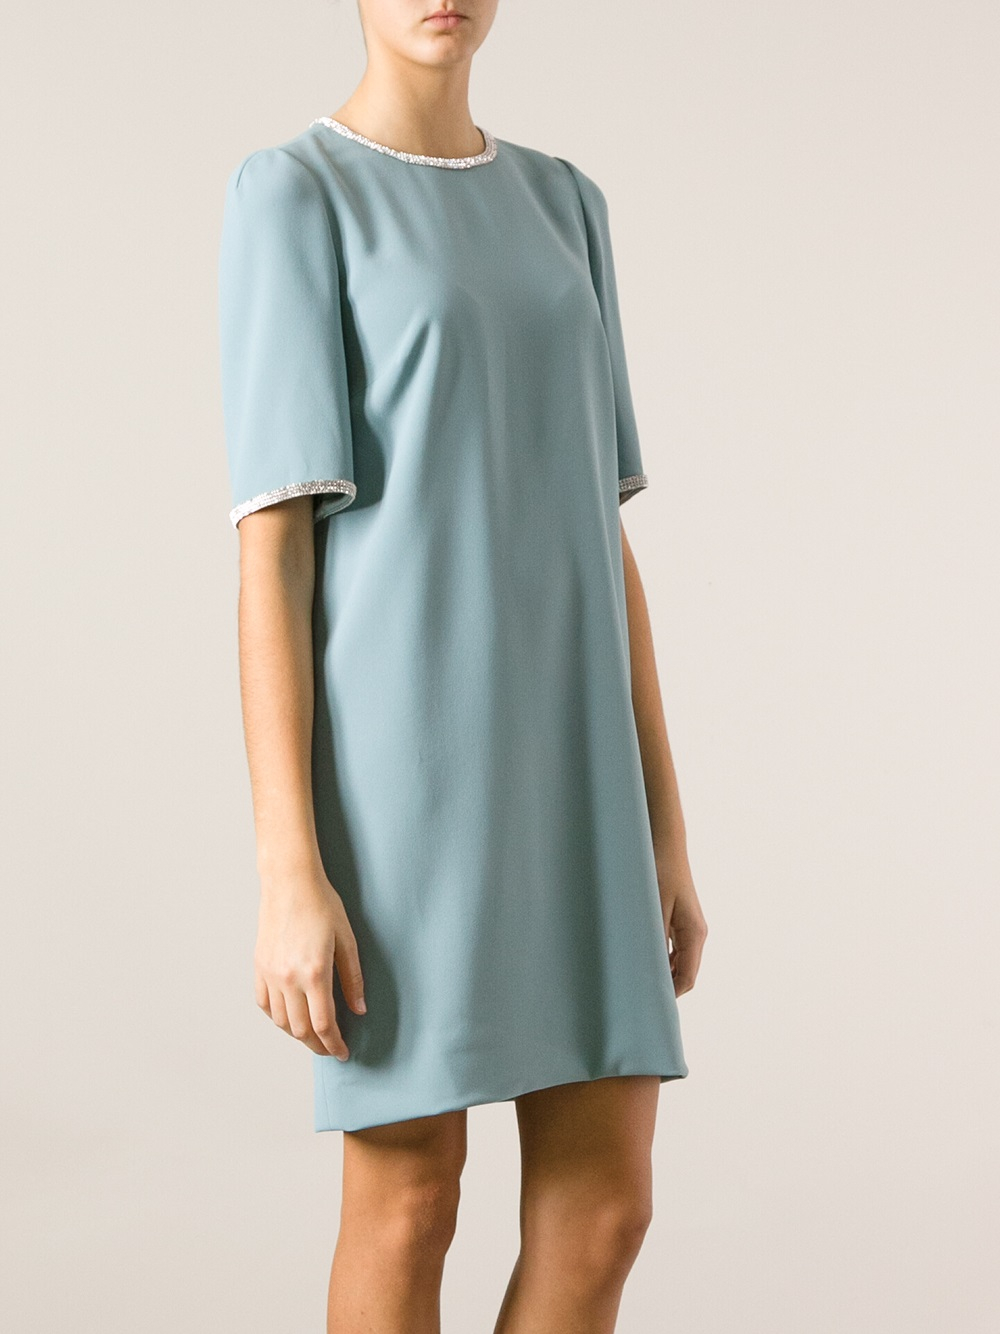 Lyst - Dolce & gabbana Embellished Dress in Blue